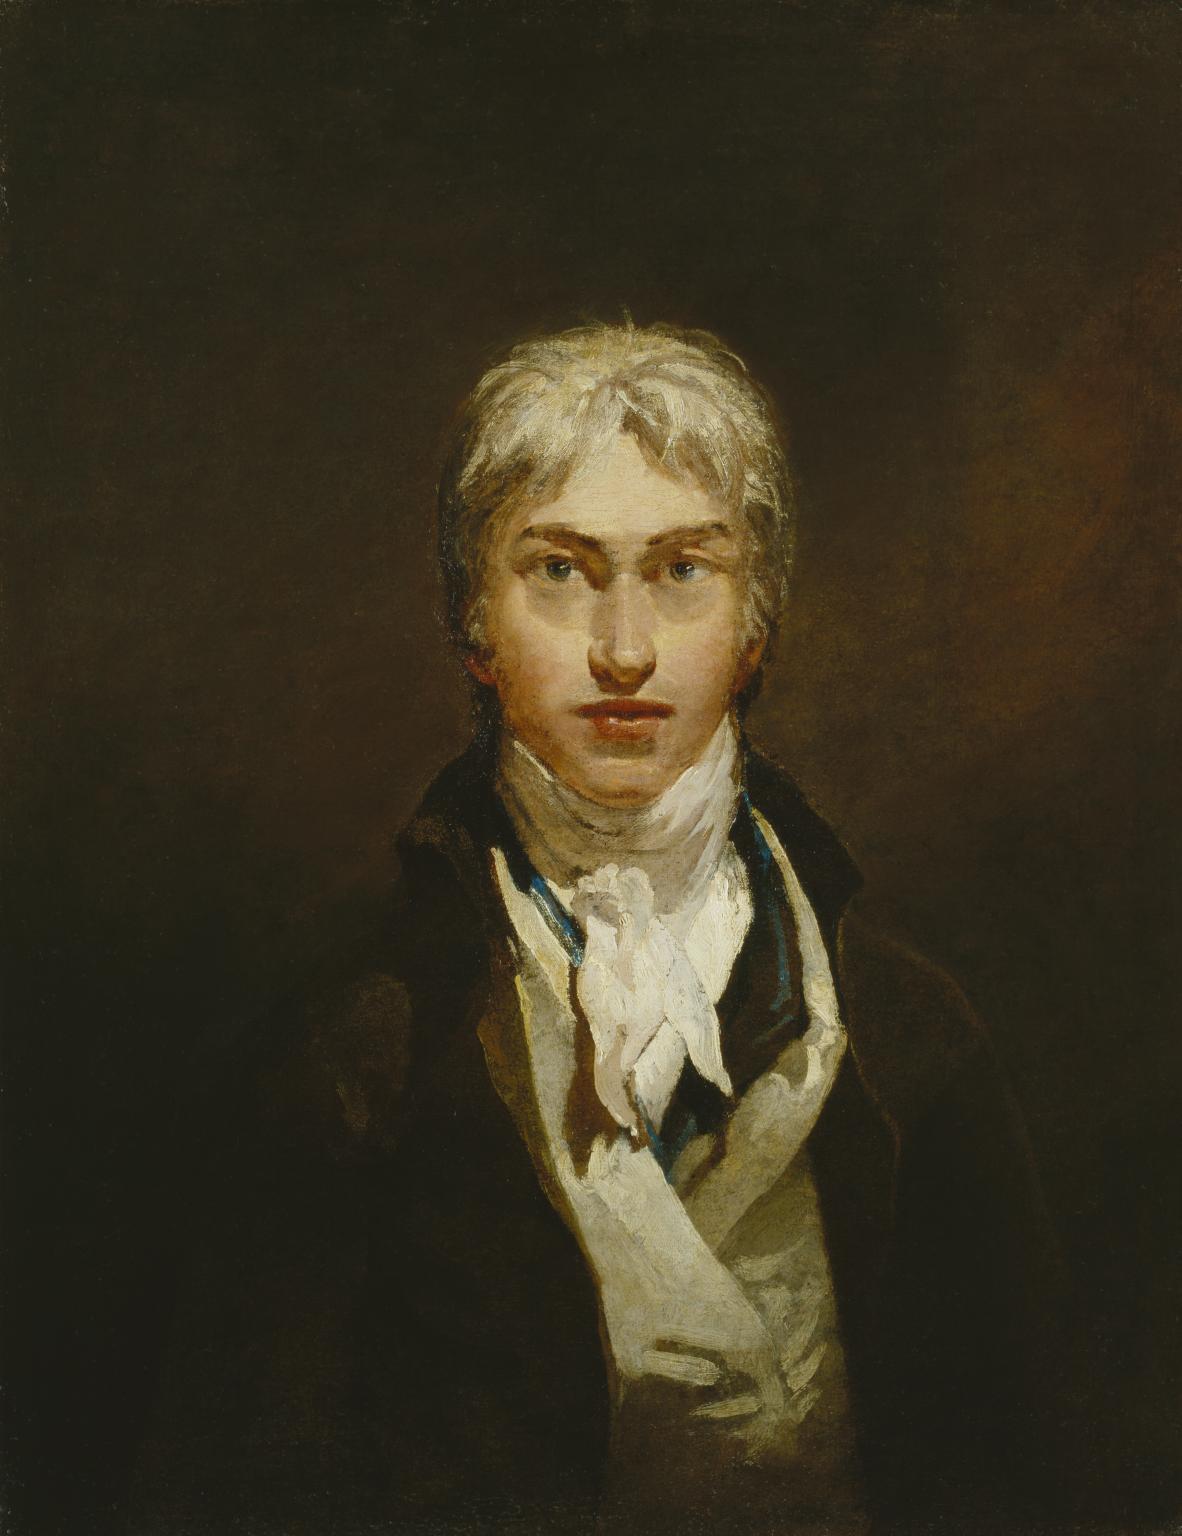 Joseph Mallord William Turner - 1775 - 19 december 1851